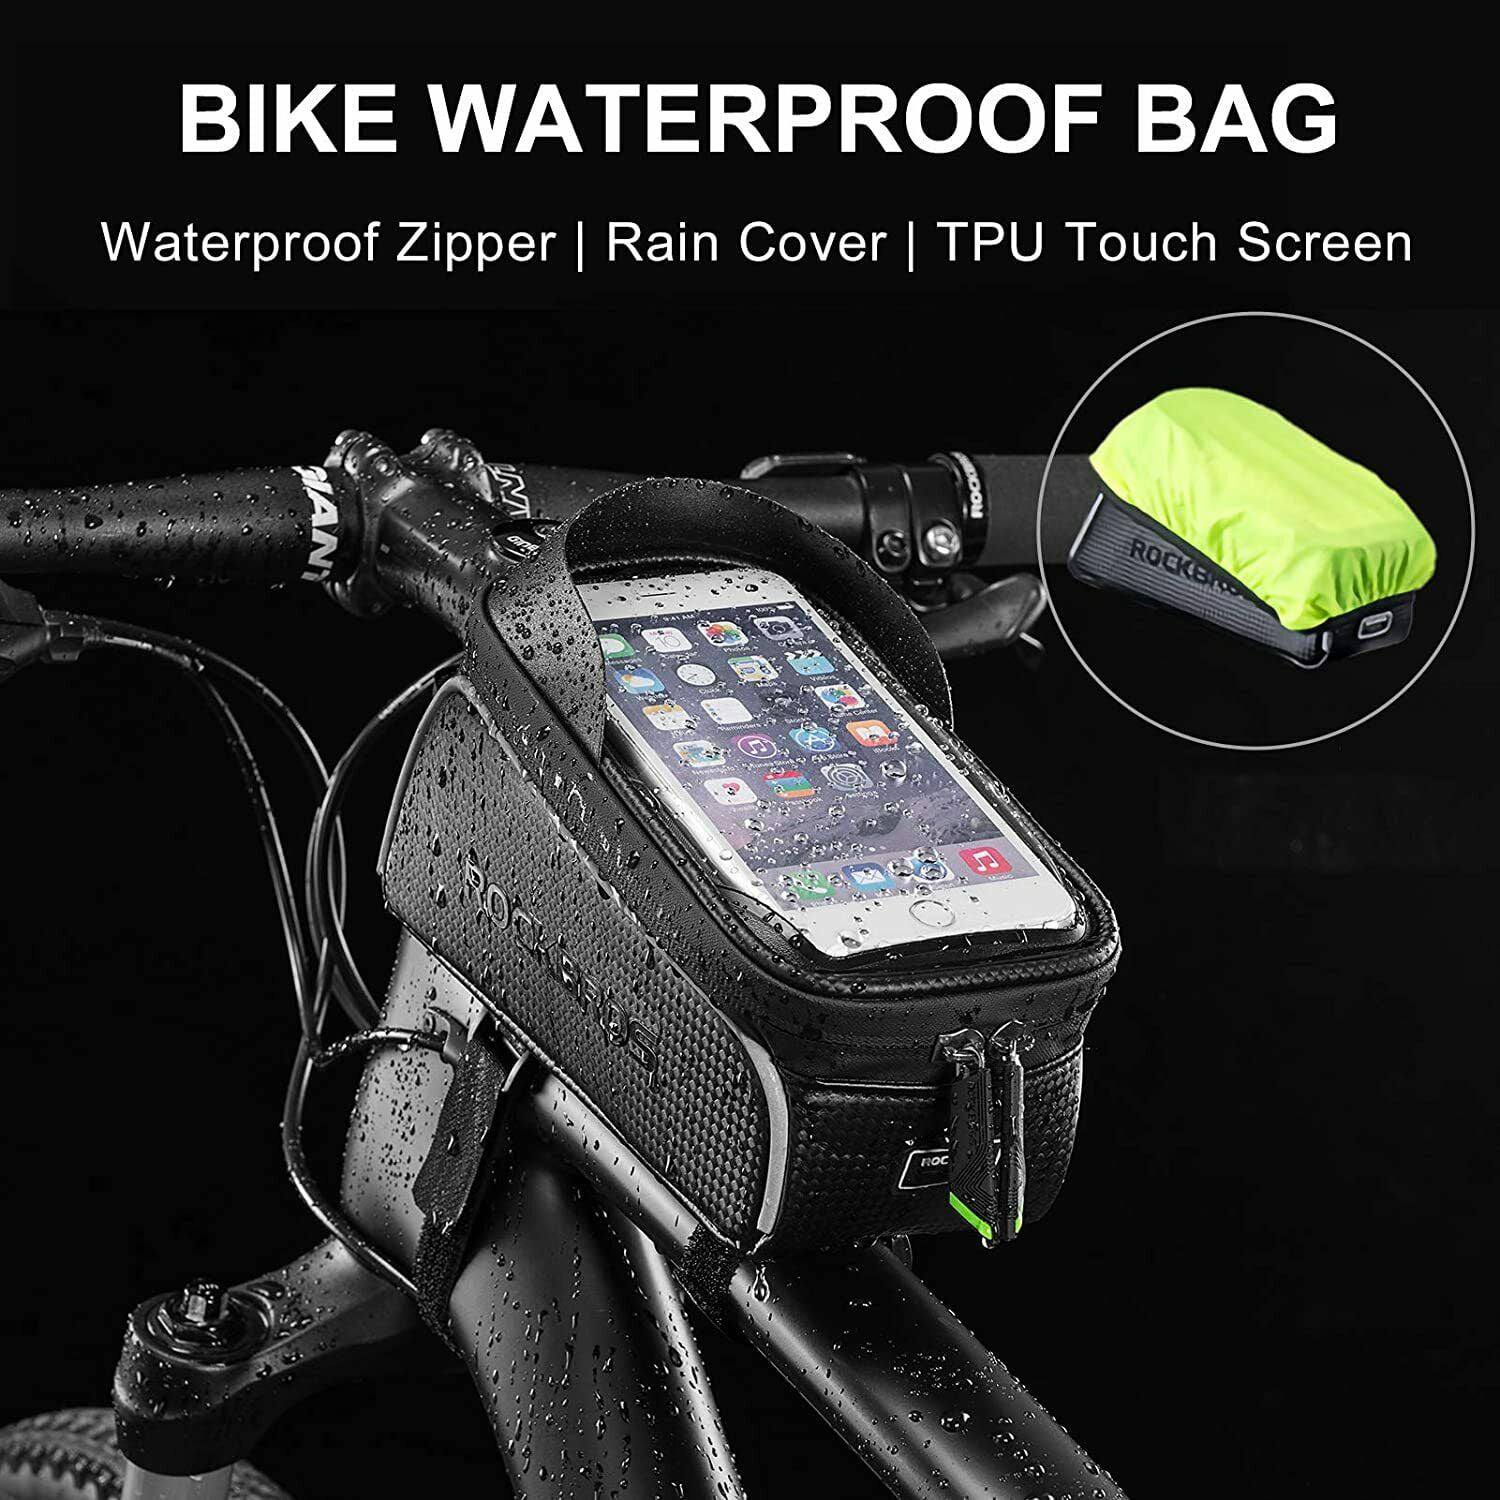 Bike Bag Bike Phone Bag, Waterproof Bike Frame Bag Bicycle Bag Top Tube Bag  Handlebar Bag with Sensitive Touch Screen Holder Case for Cellphone - China  Travel Bag, Sports Bag